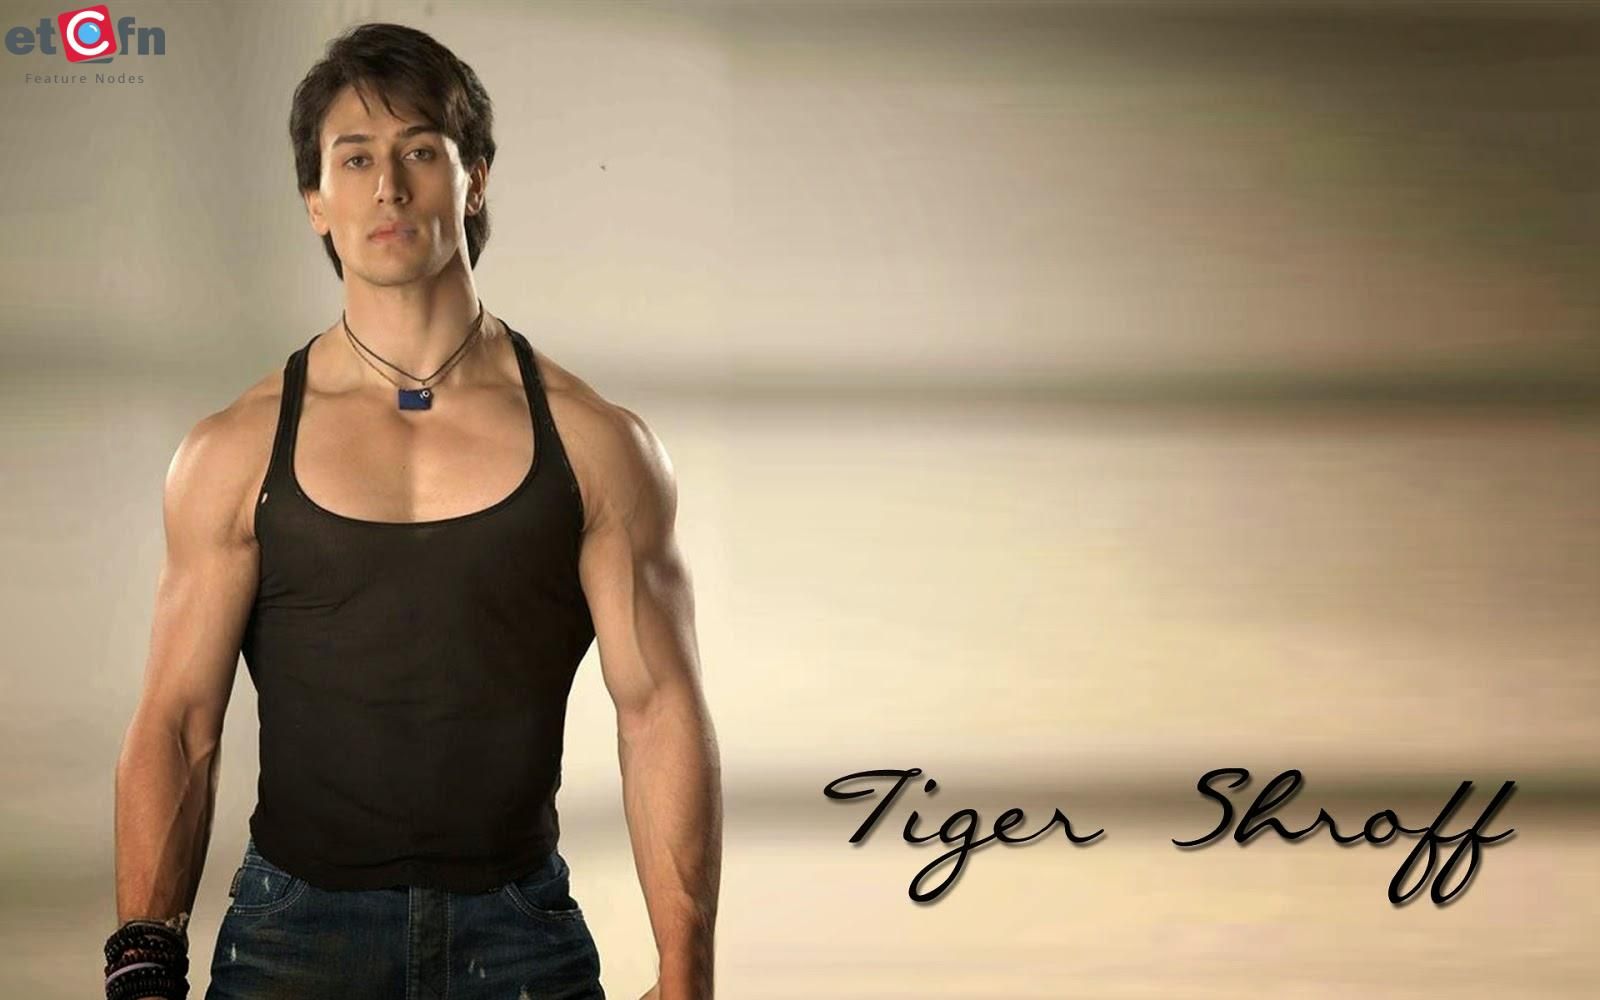 Tiger Shroff HD Wallpaper And Biography- etcfn.com. Tiger shroff